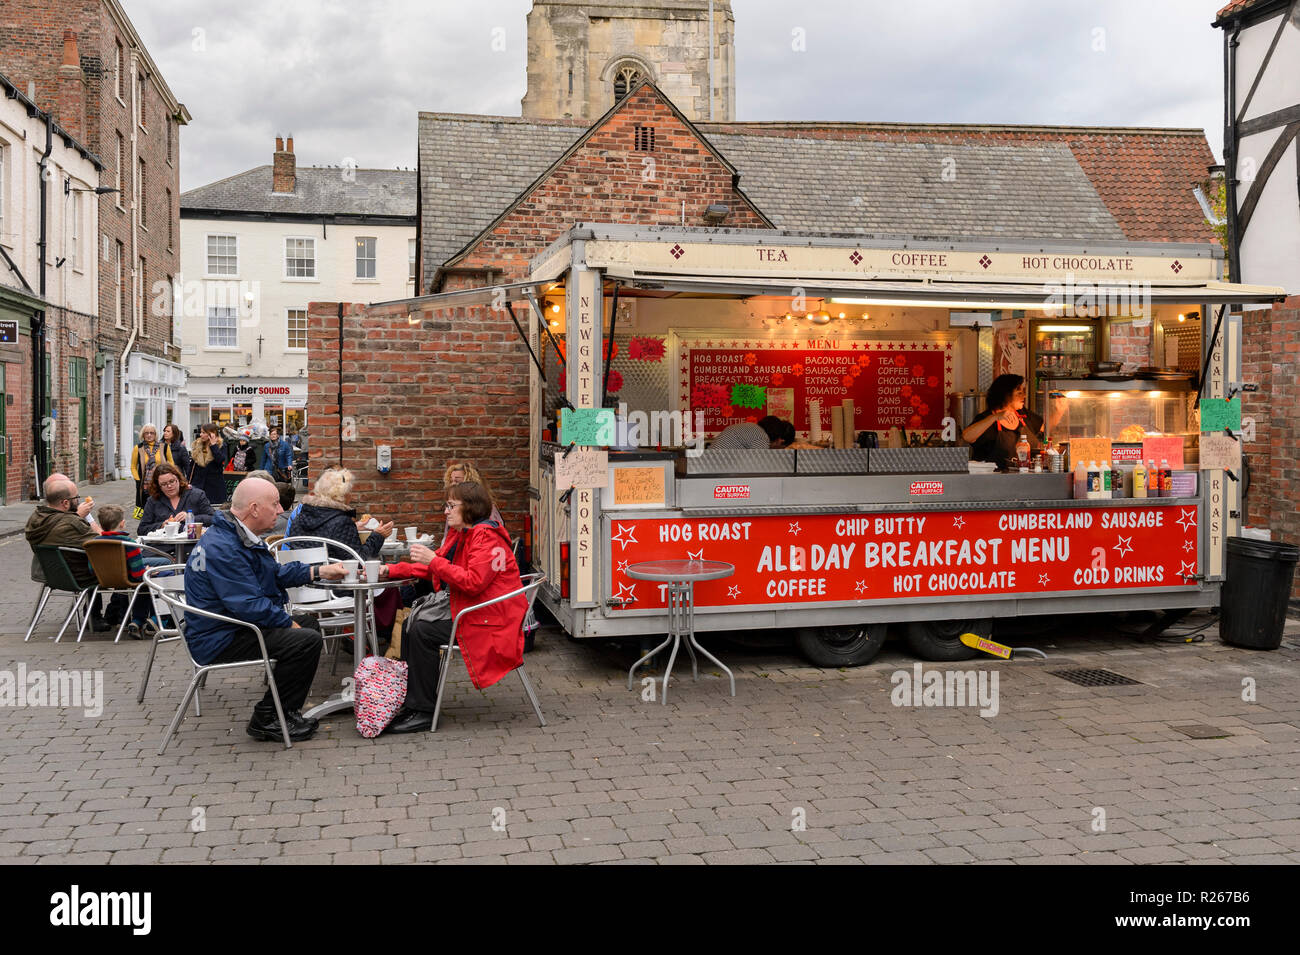 Customers sit outside at tables, eating street food & drinking & 2 women work in Newgate Hog Roast van - Shambles Market, York, Yorkshire, England, UK Stock Photo